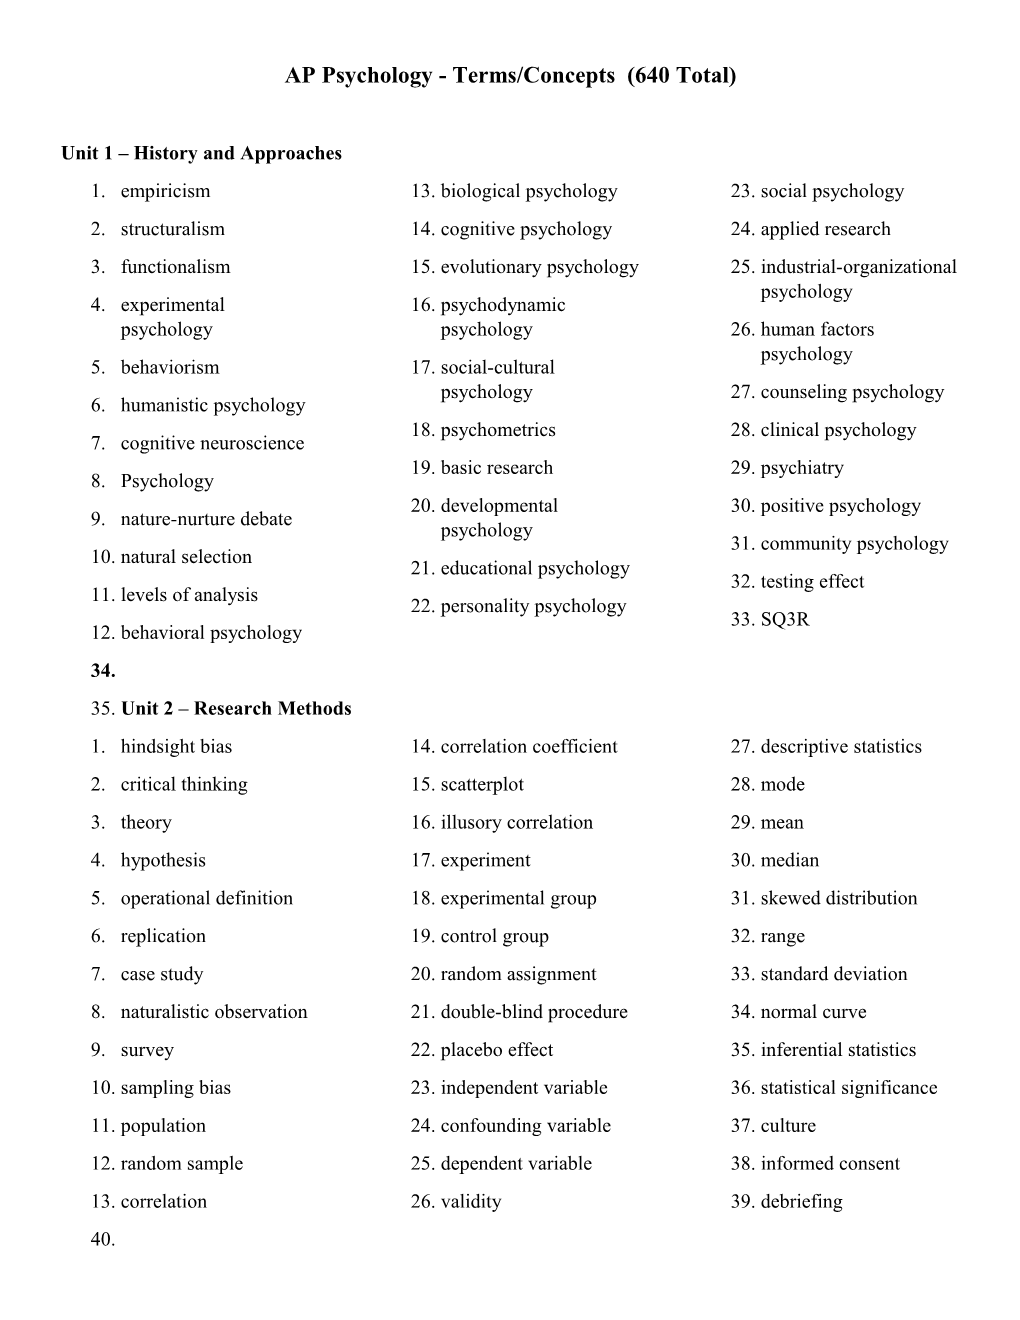 AP Psychology- Terms/Concepts (640 Total)